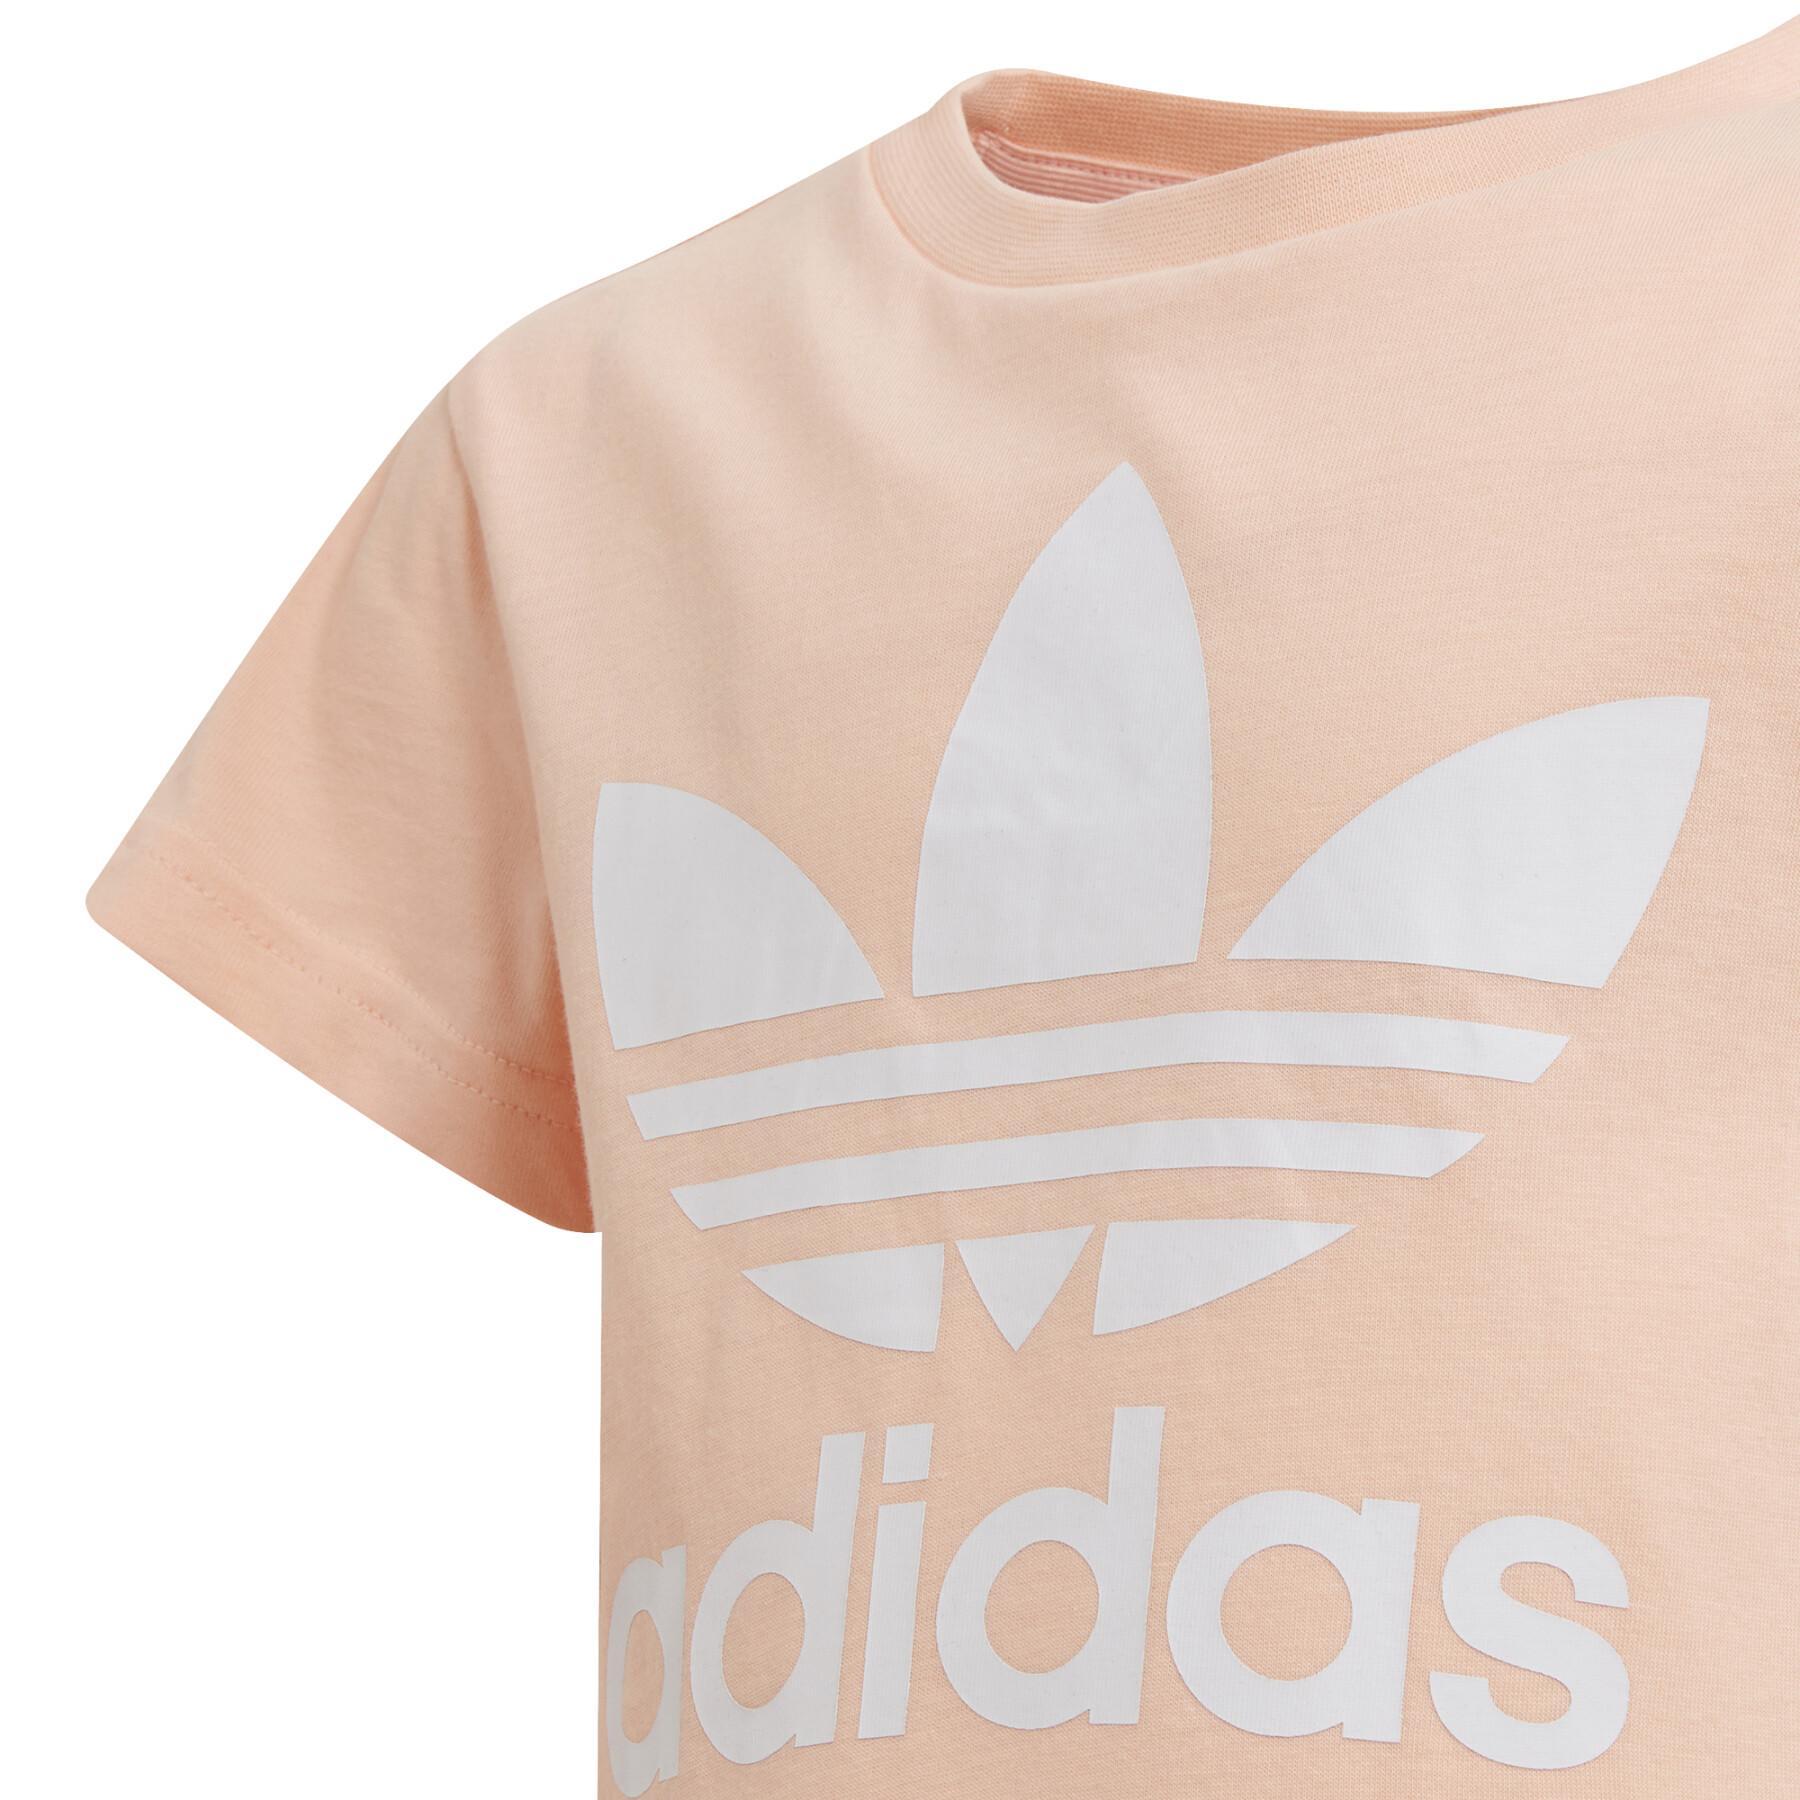 T-shirt enfant adidas Originals Adicolor Trefoil